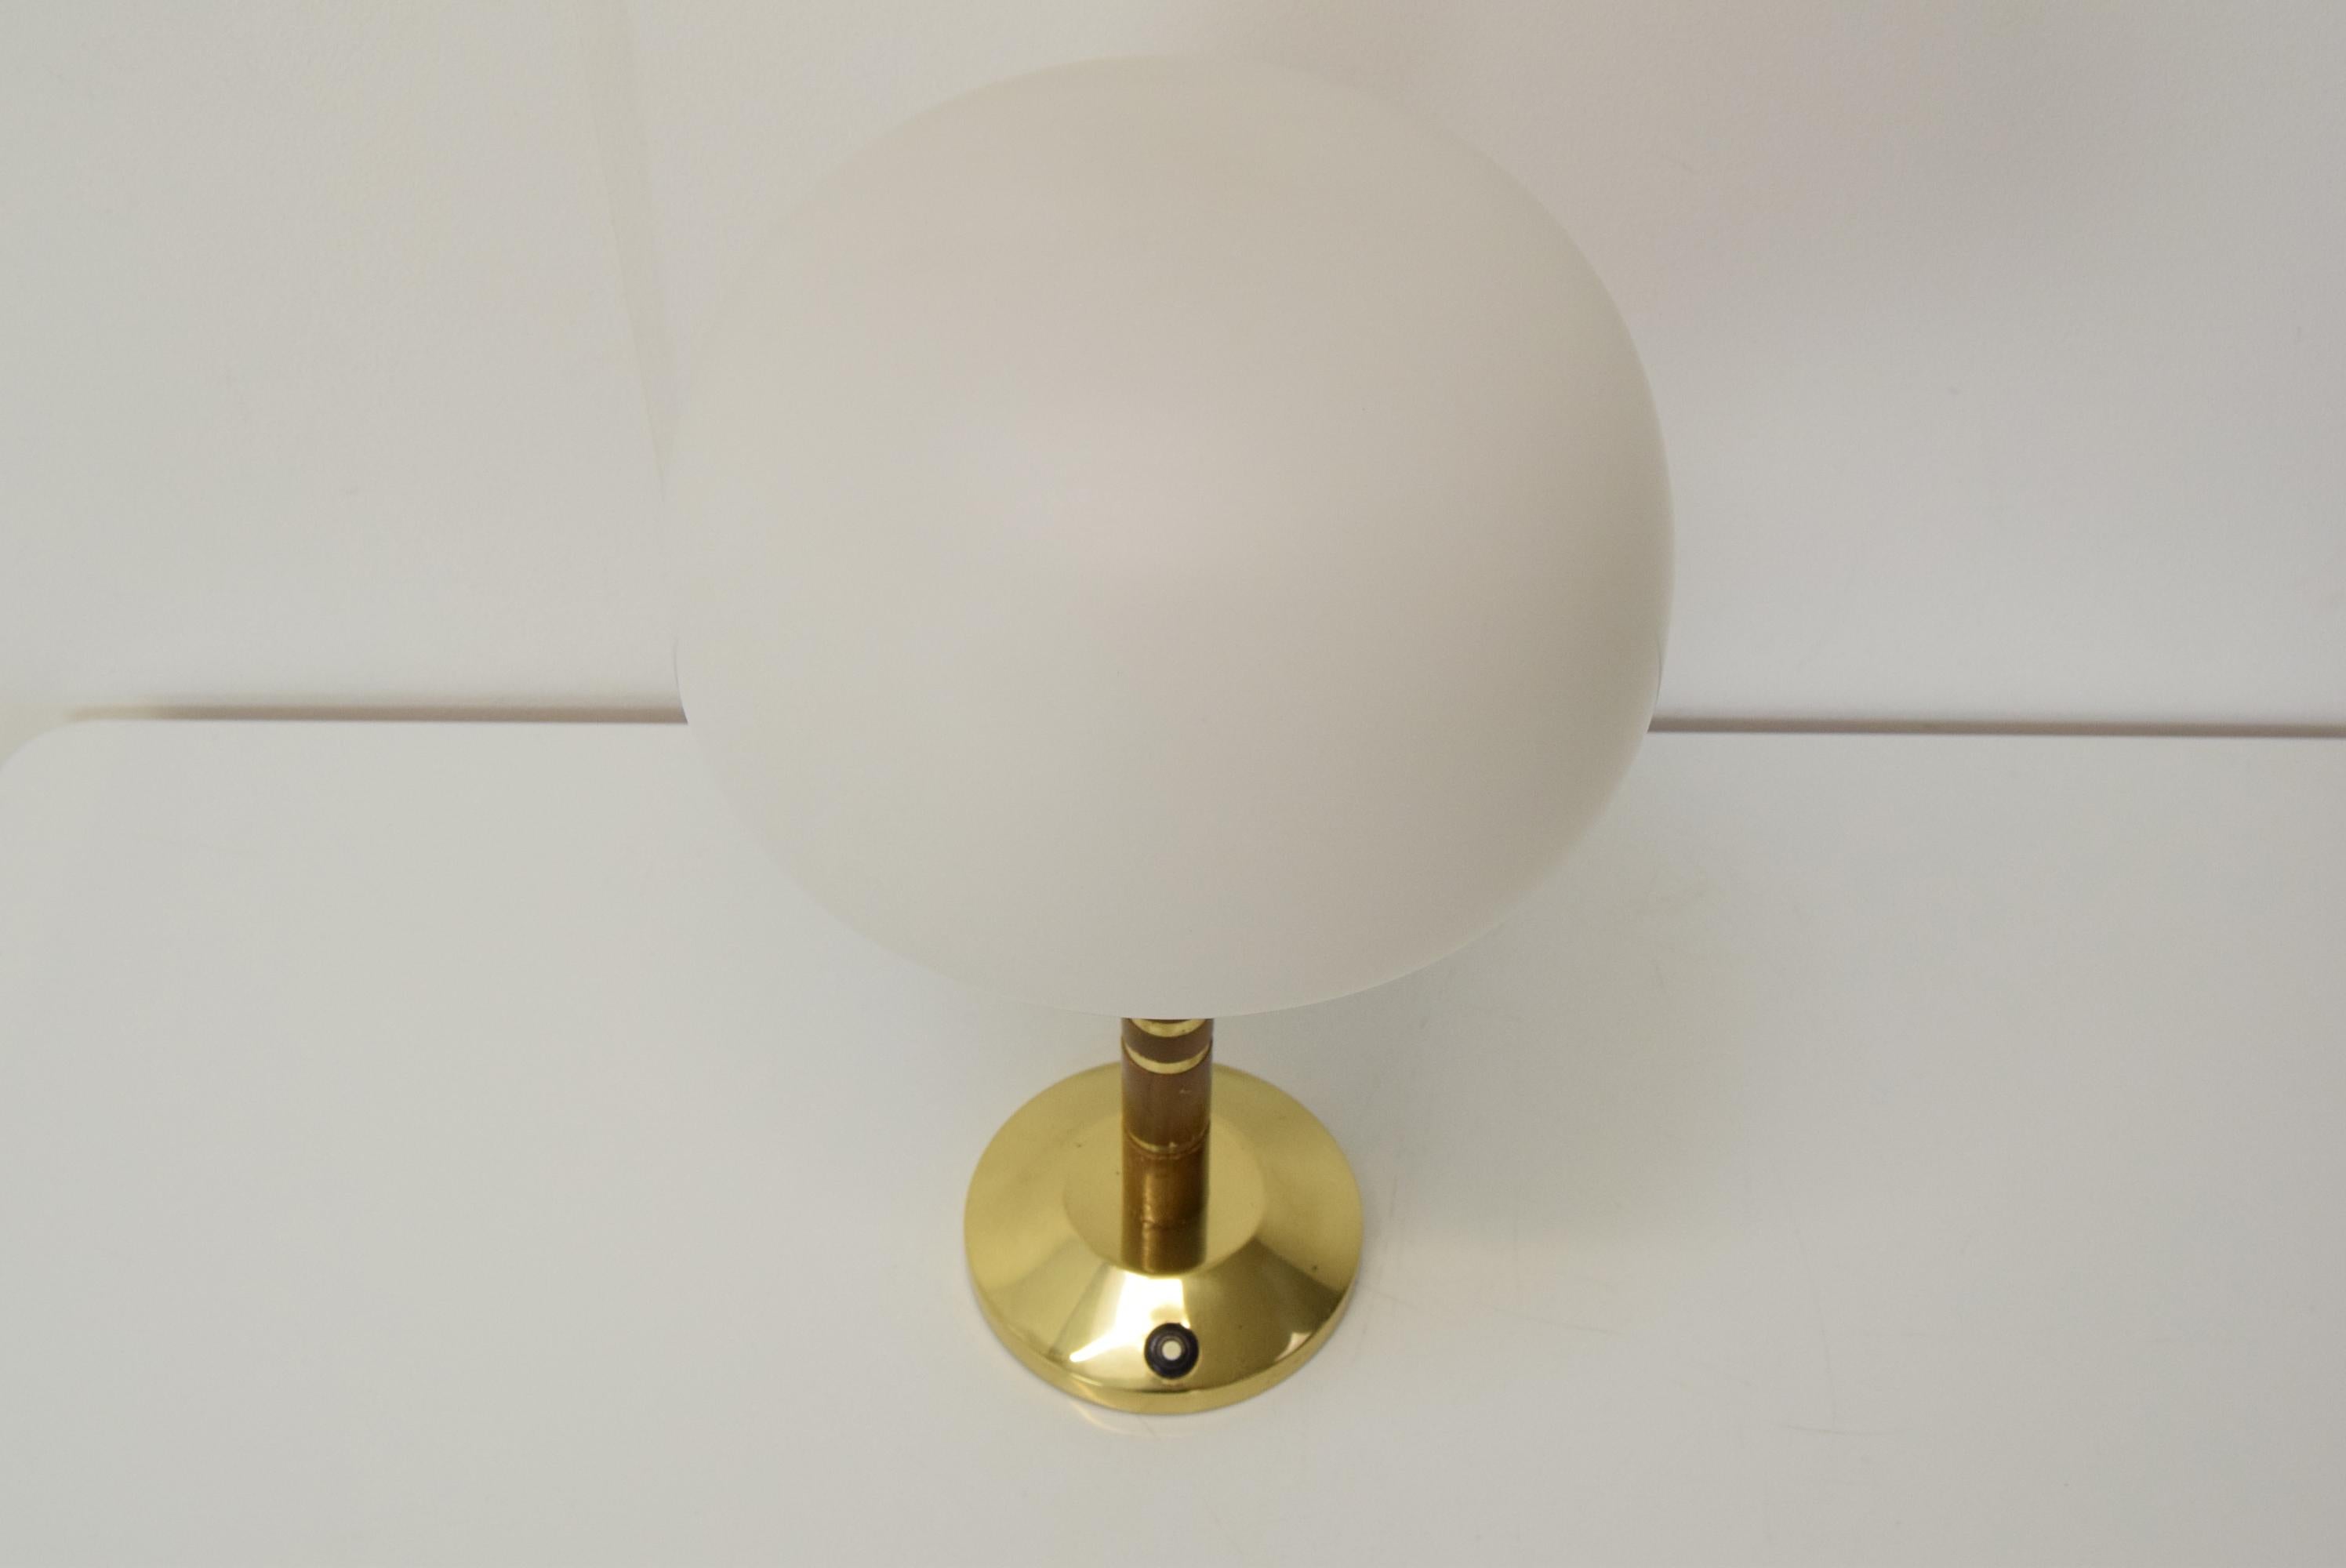 Brass Vintage Table Lamp Designed by Jaroslav Bejvl for Lidokov, 1960's. 